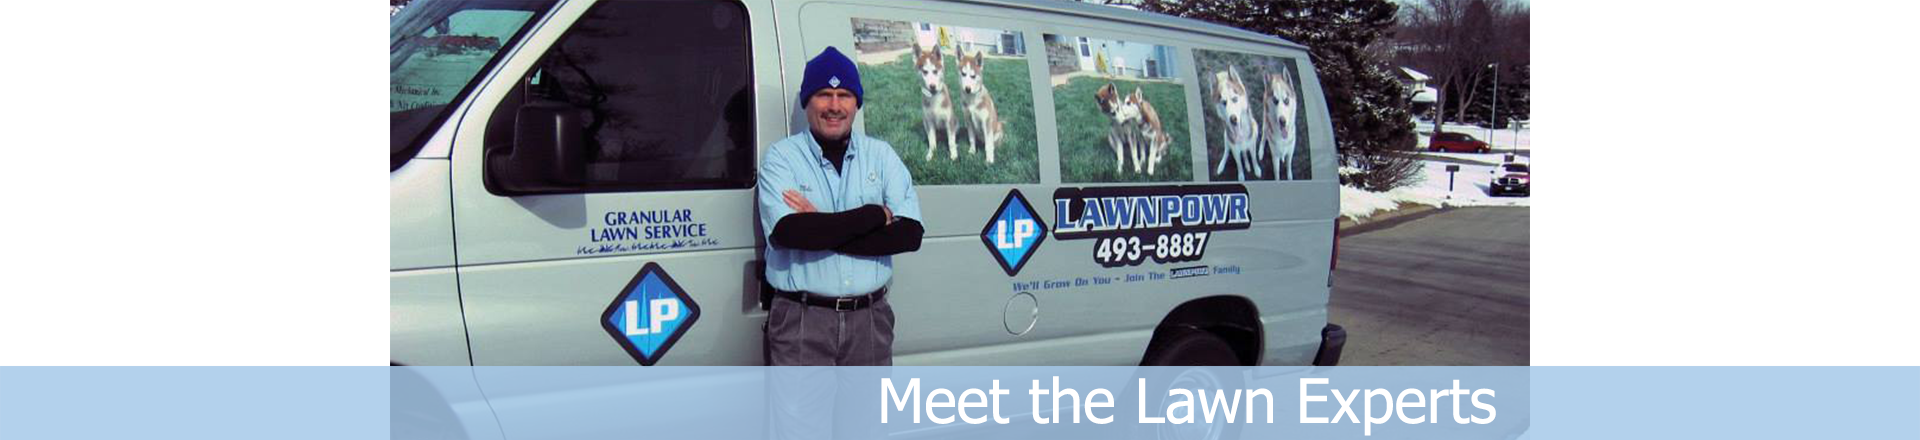 LAWNPOWR Lawn Experts in Omaha Nebraska